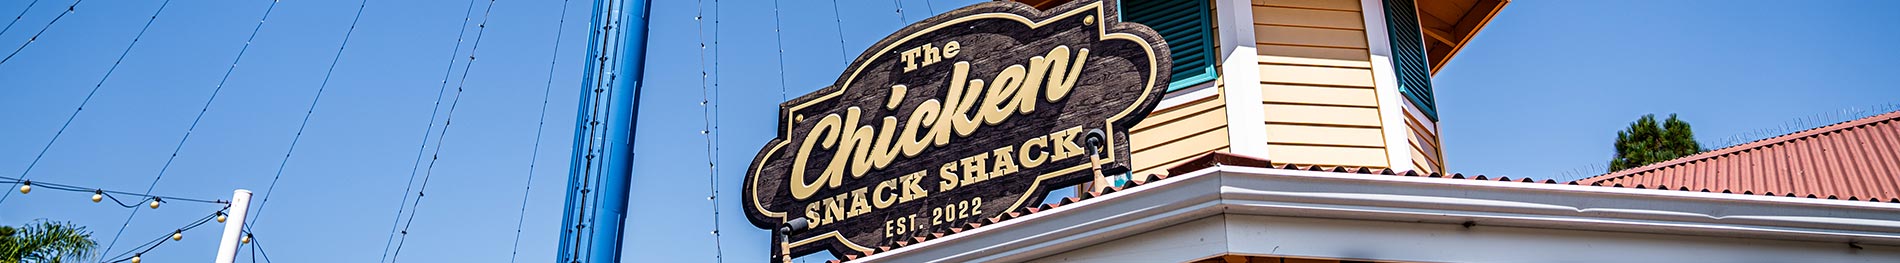 The Chicken Snack Shack